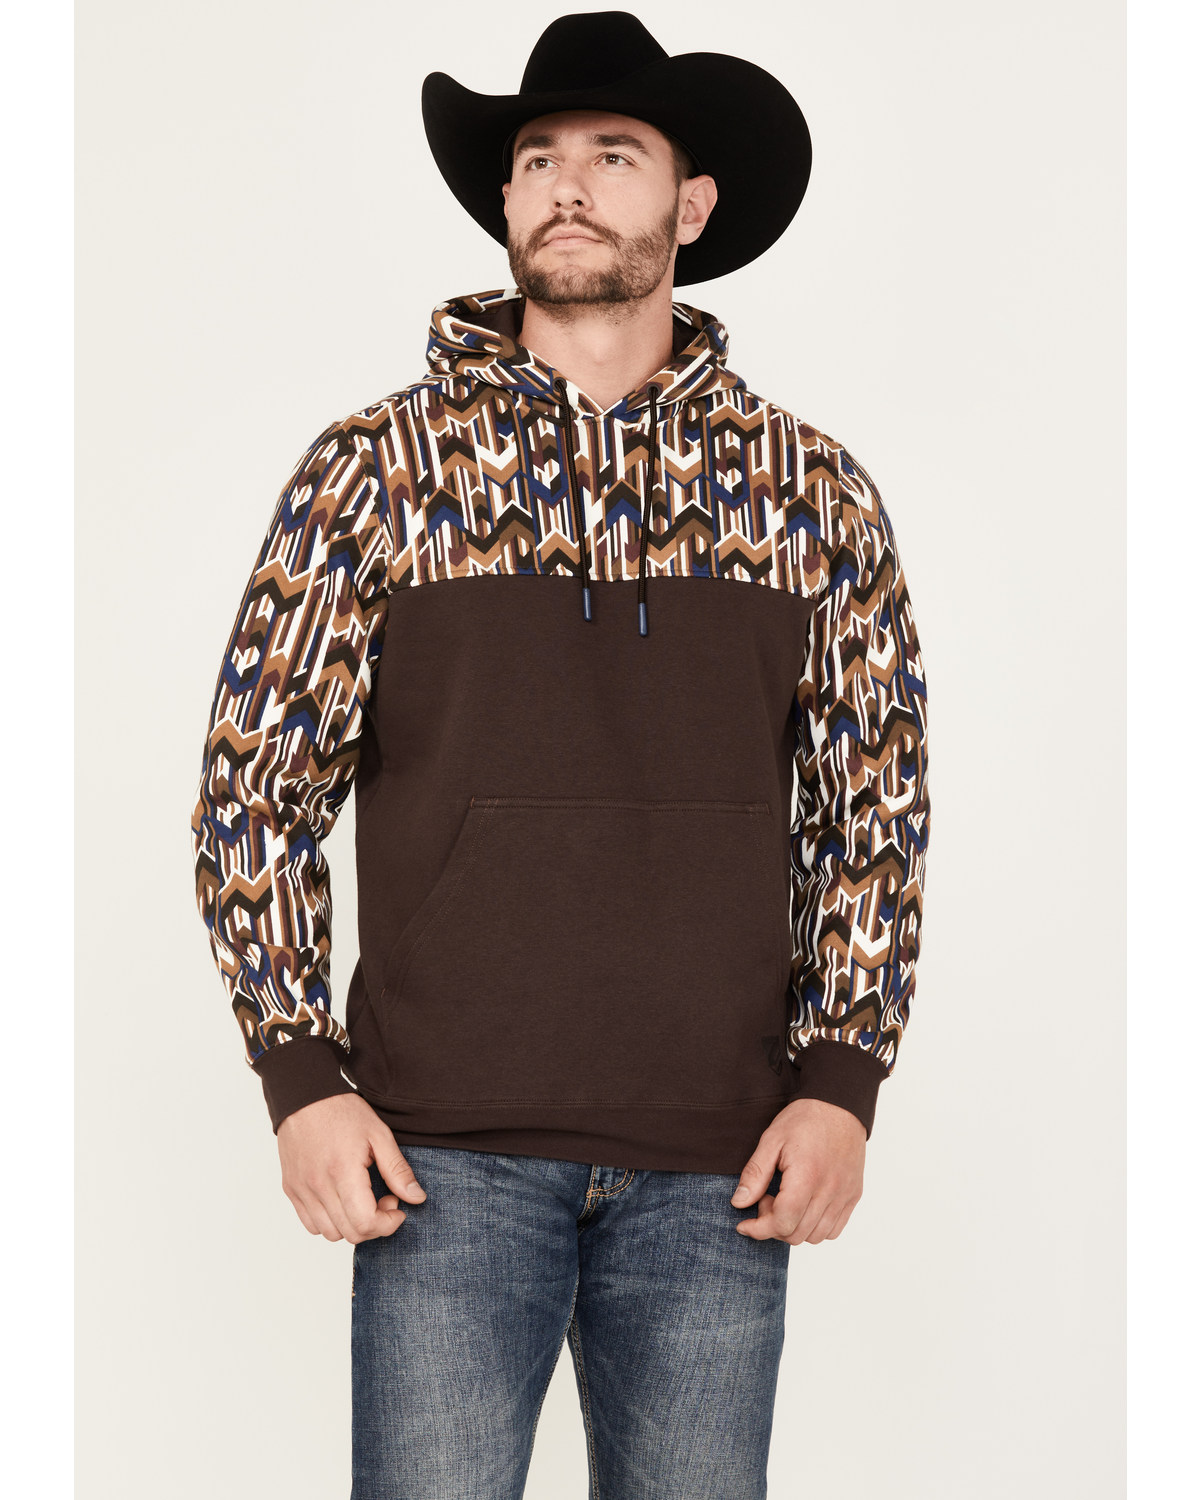 RANK 45® Men's Blatic Southwestern Print Hooded Sweatshirt